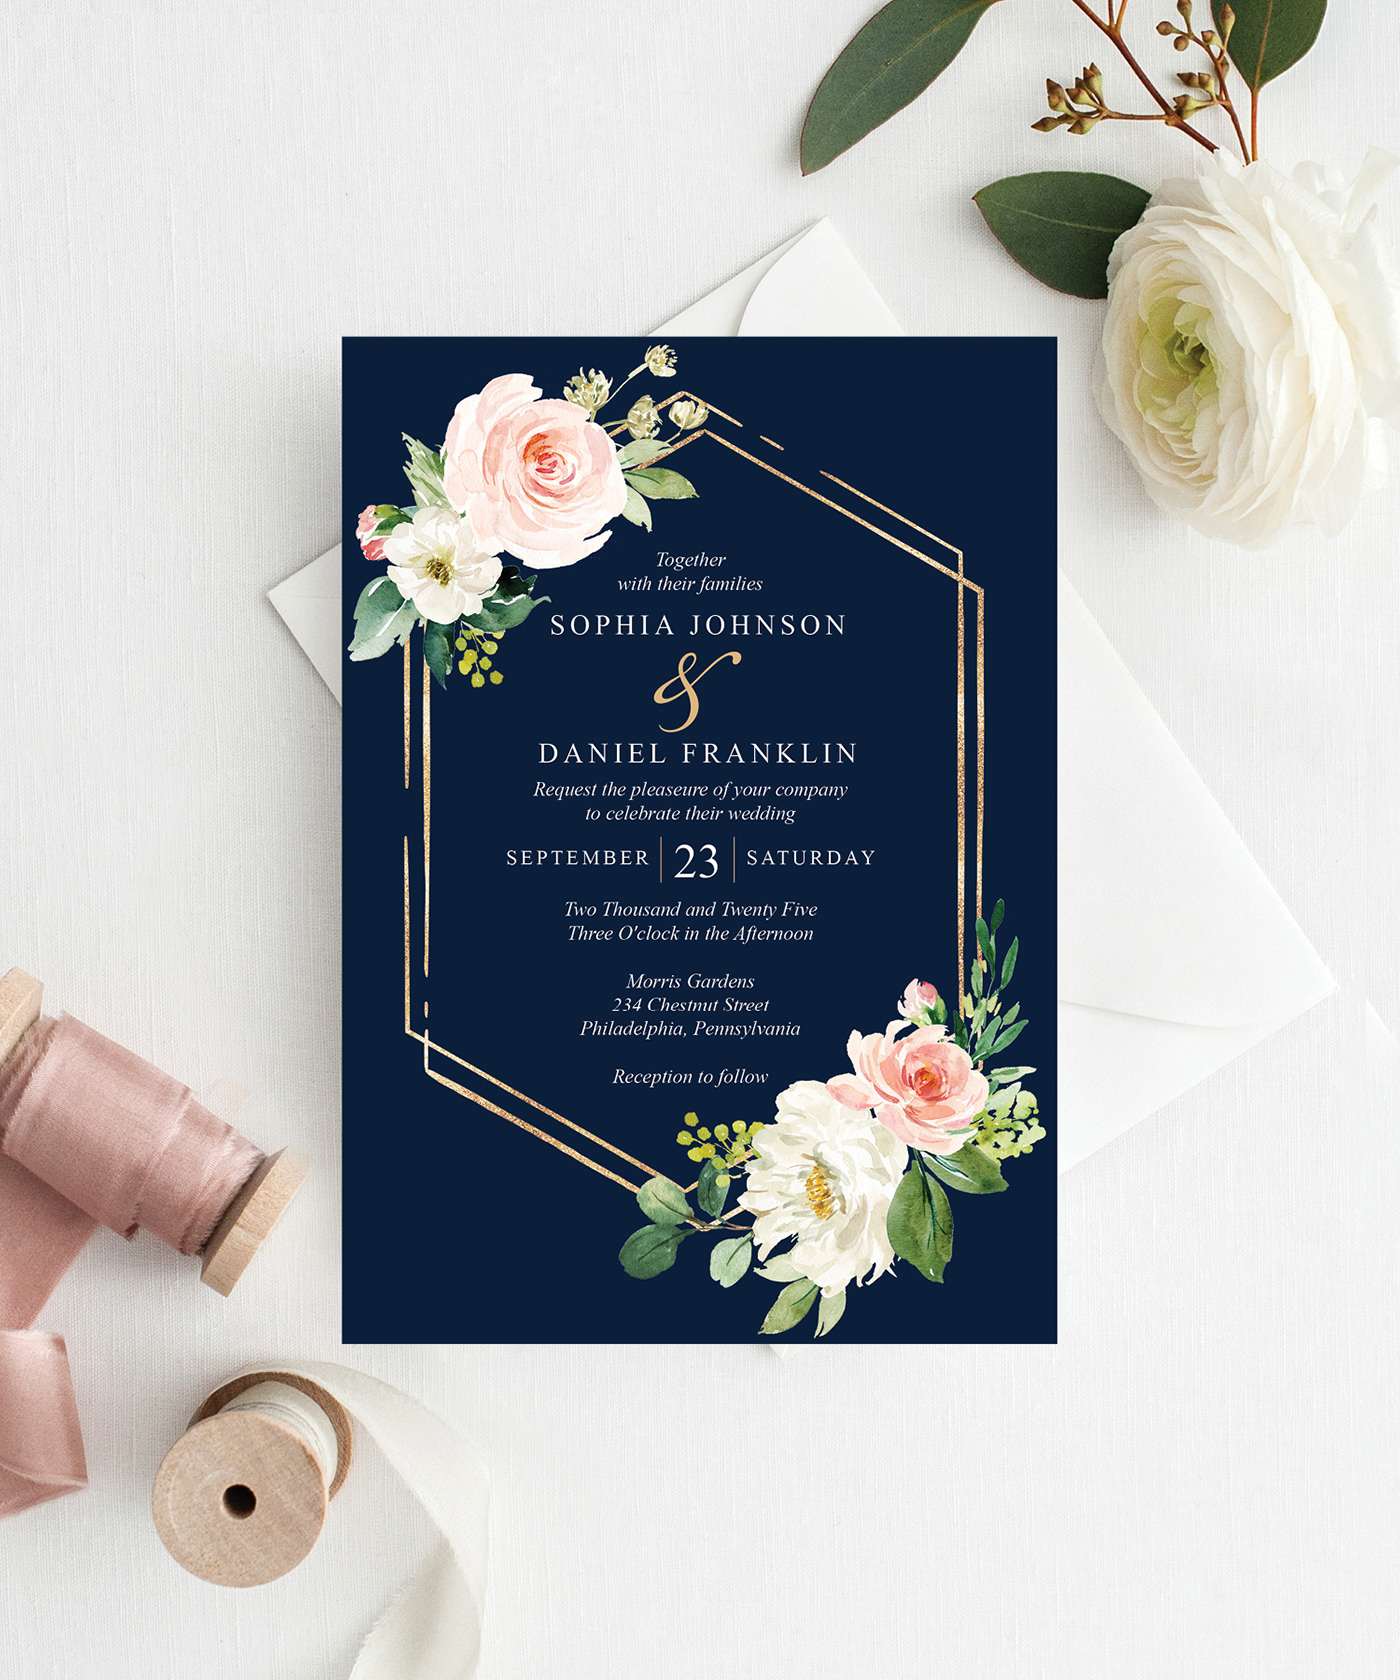 Details Card Invitation invites response card RSVP card Stationery wedding Wedding invitation set wedding invitations Wedding Invites